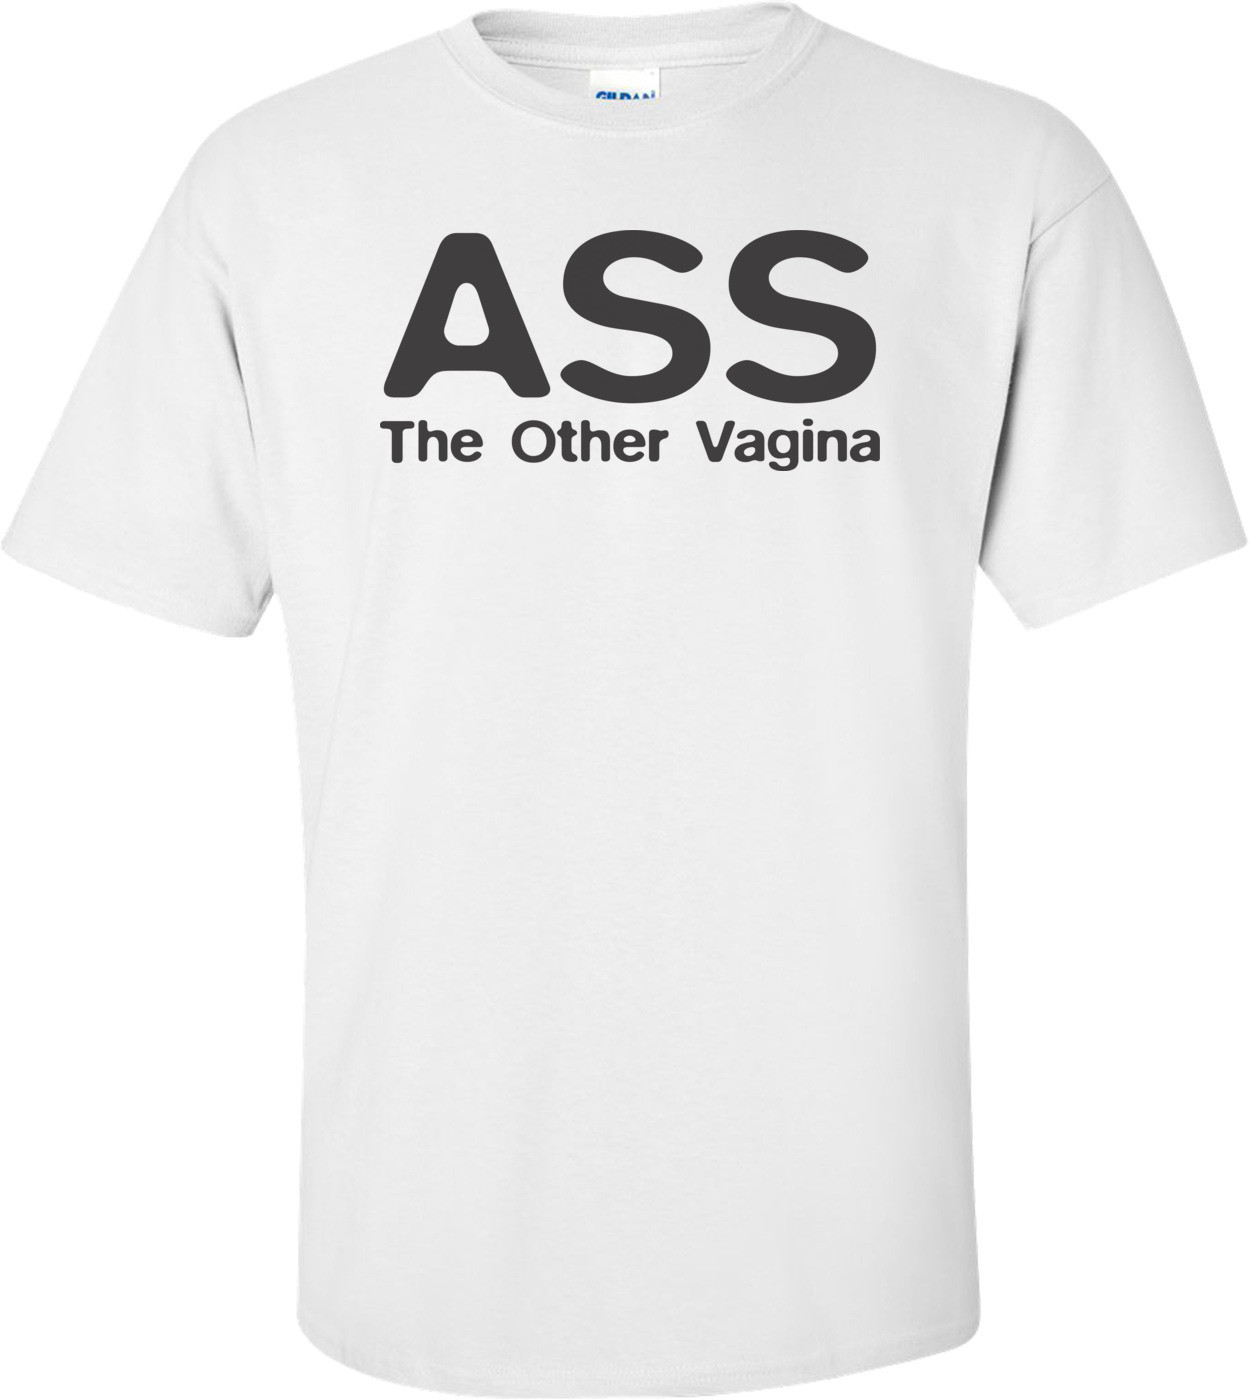 Ass The Other Vagina